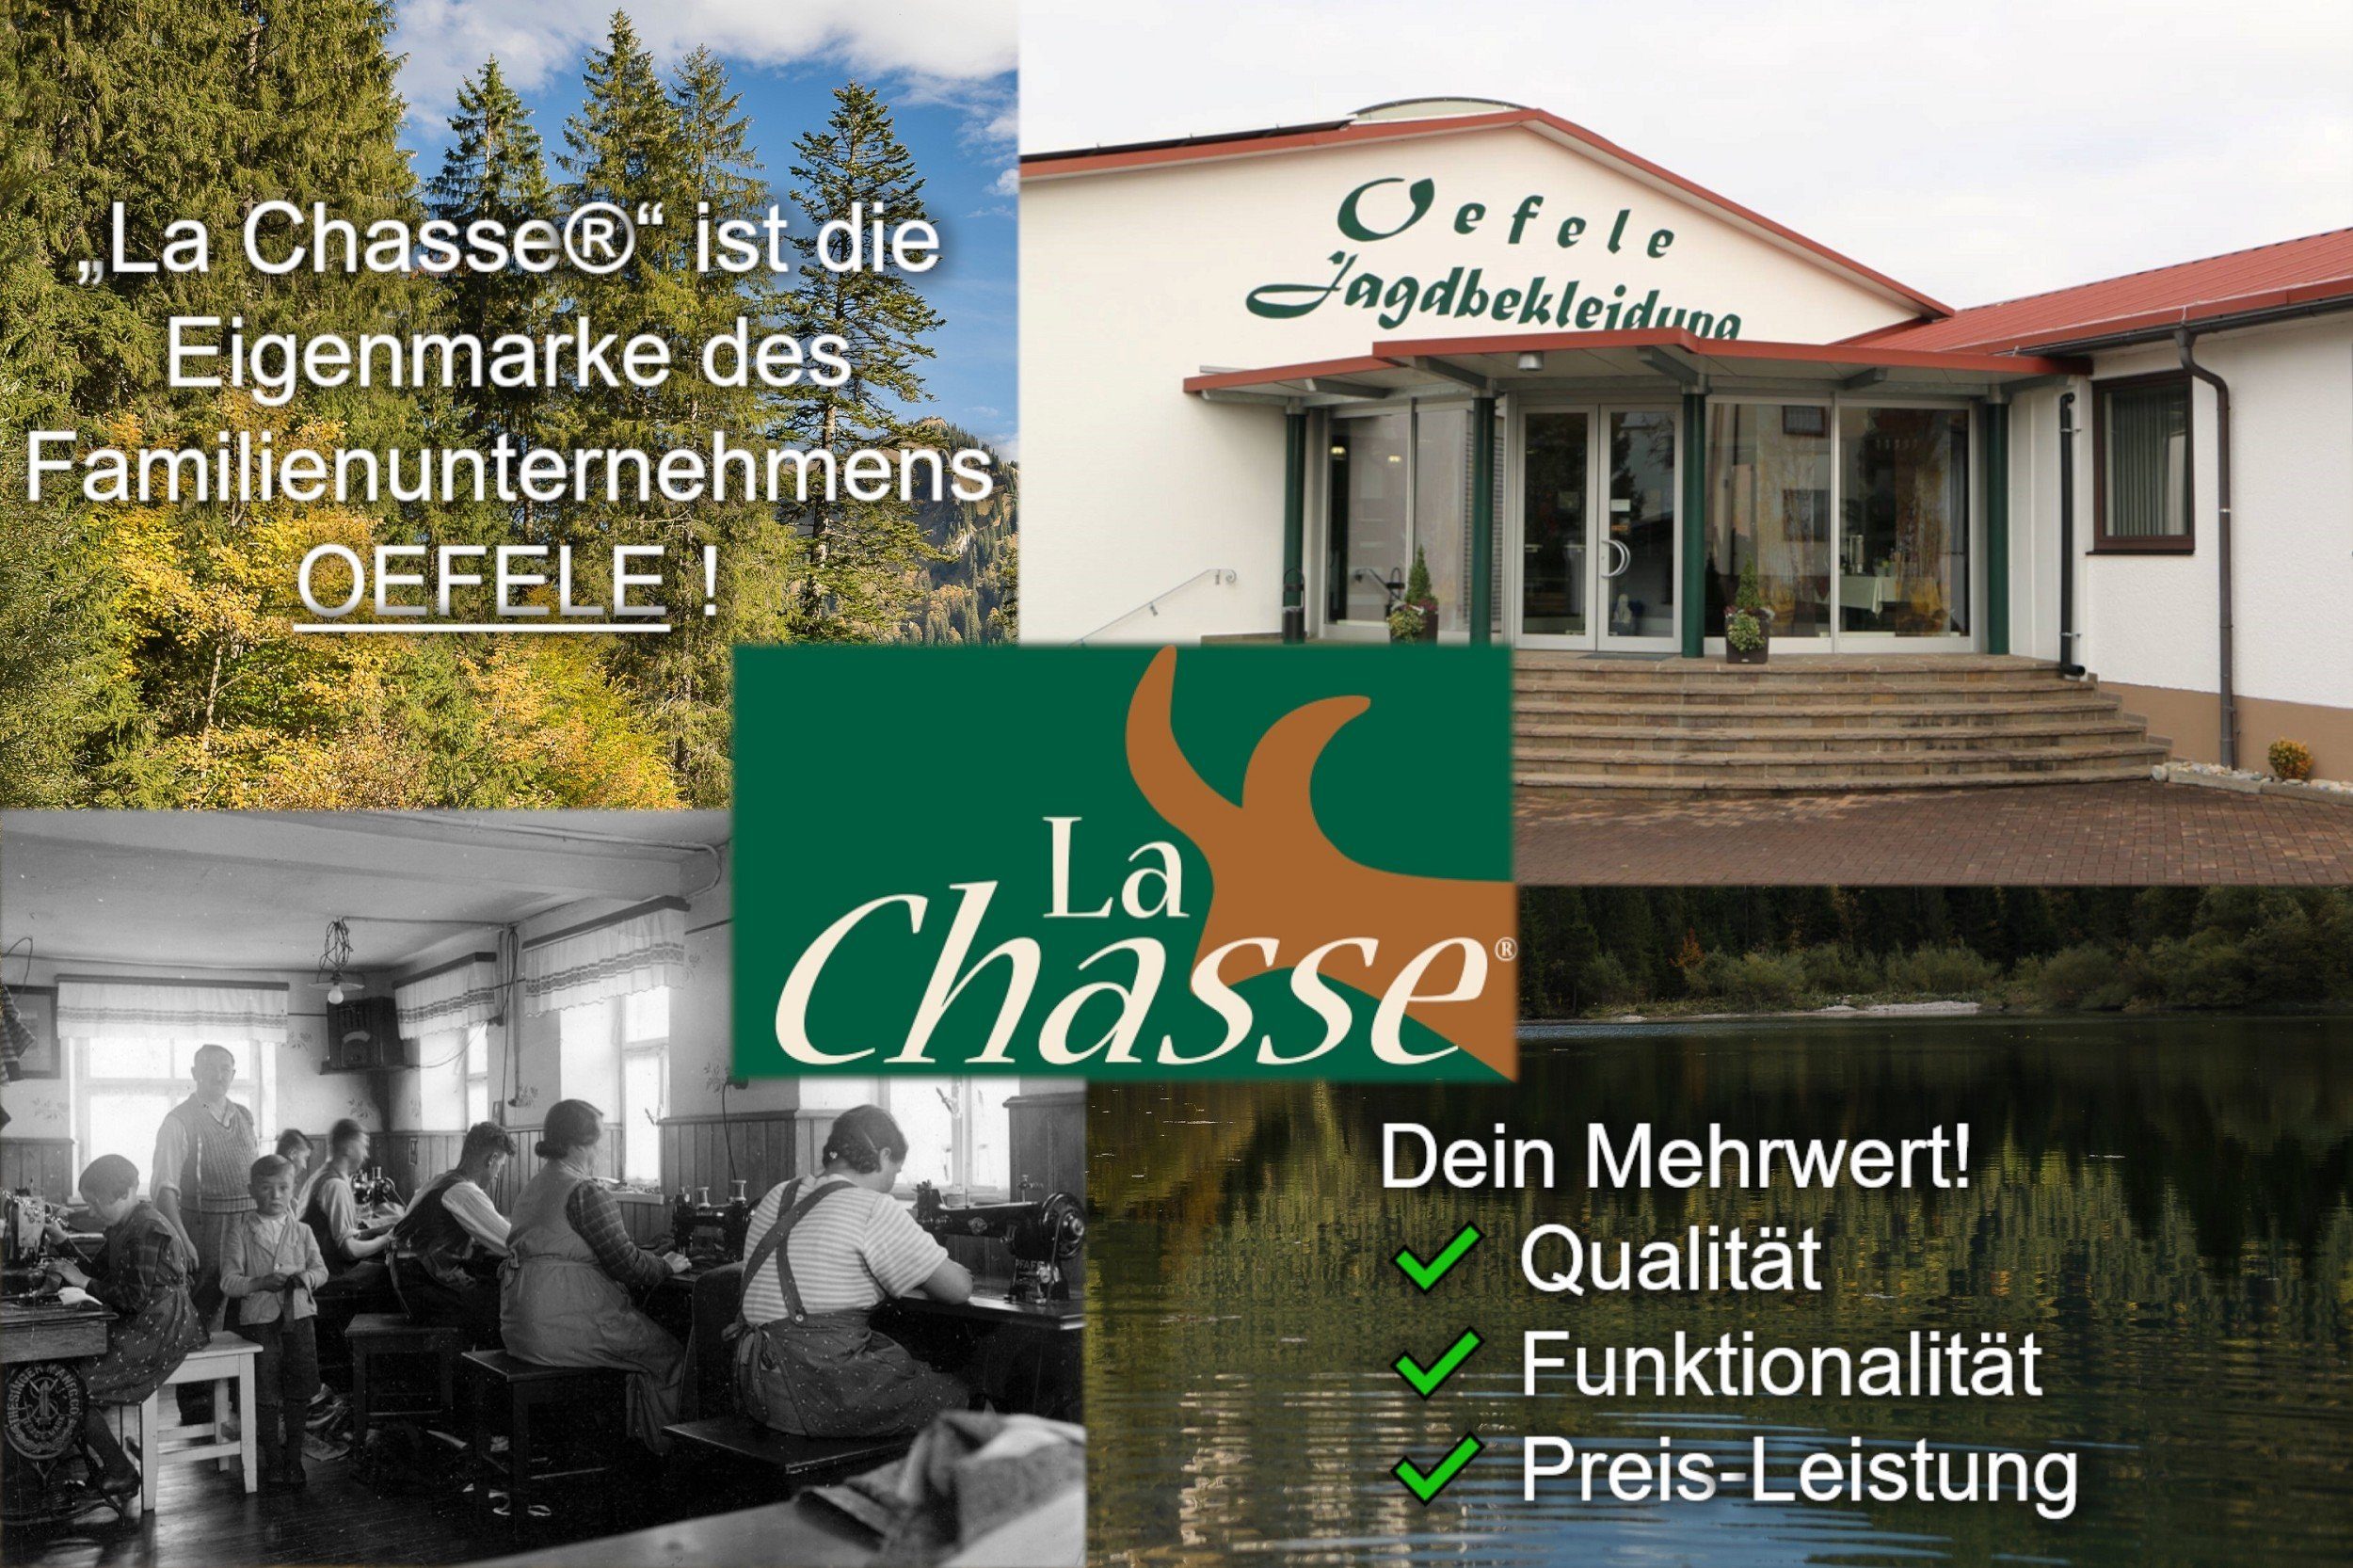 Chasse® La oliv Filzhut Jagdhut Schinderhannes-Trachtenhut & braun Försterhut Stopselhut